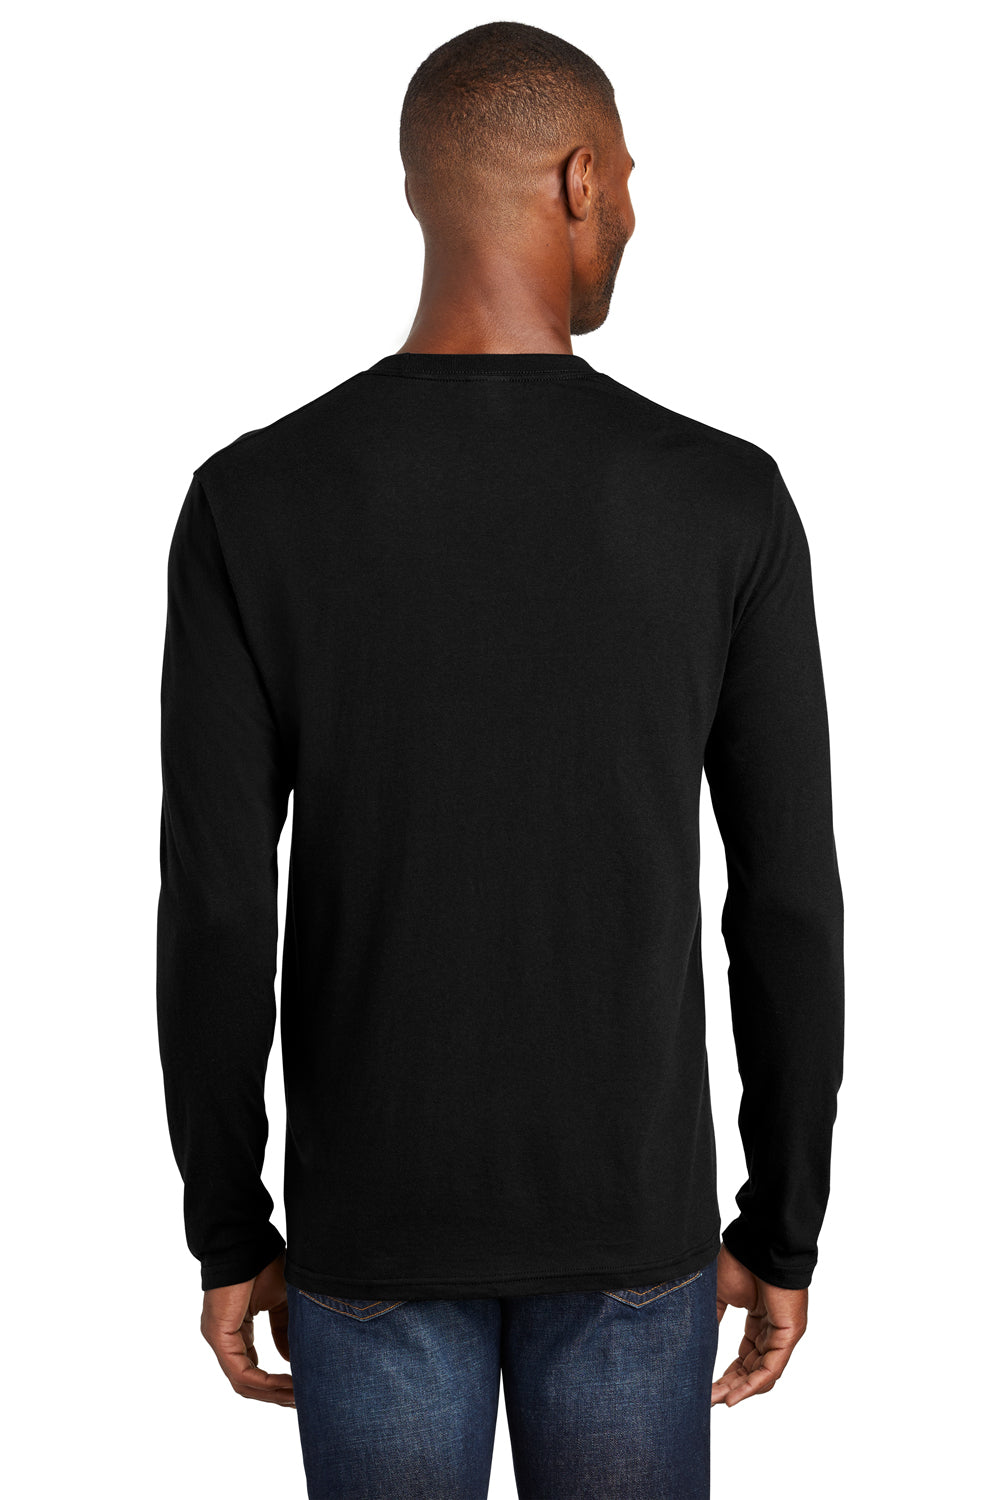 Port & Company PC455LS Mens Fan Favorite Long Sleeve Crewneck T-Shirt Black Back